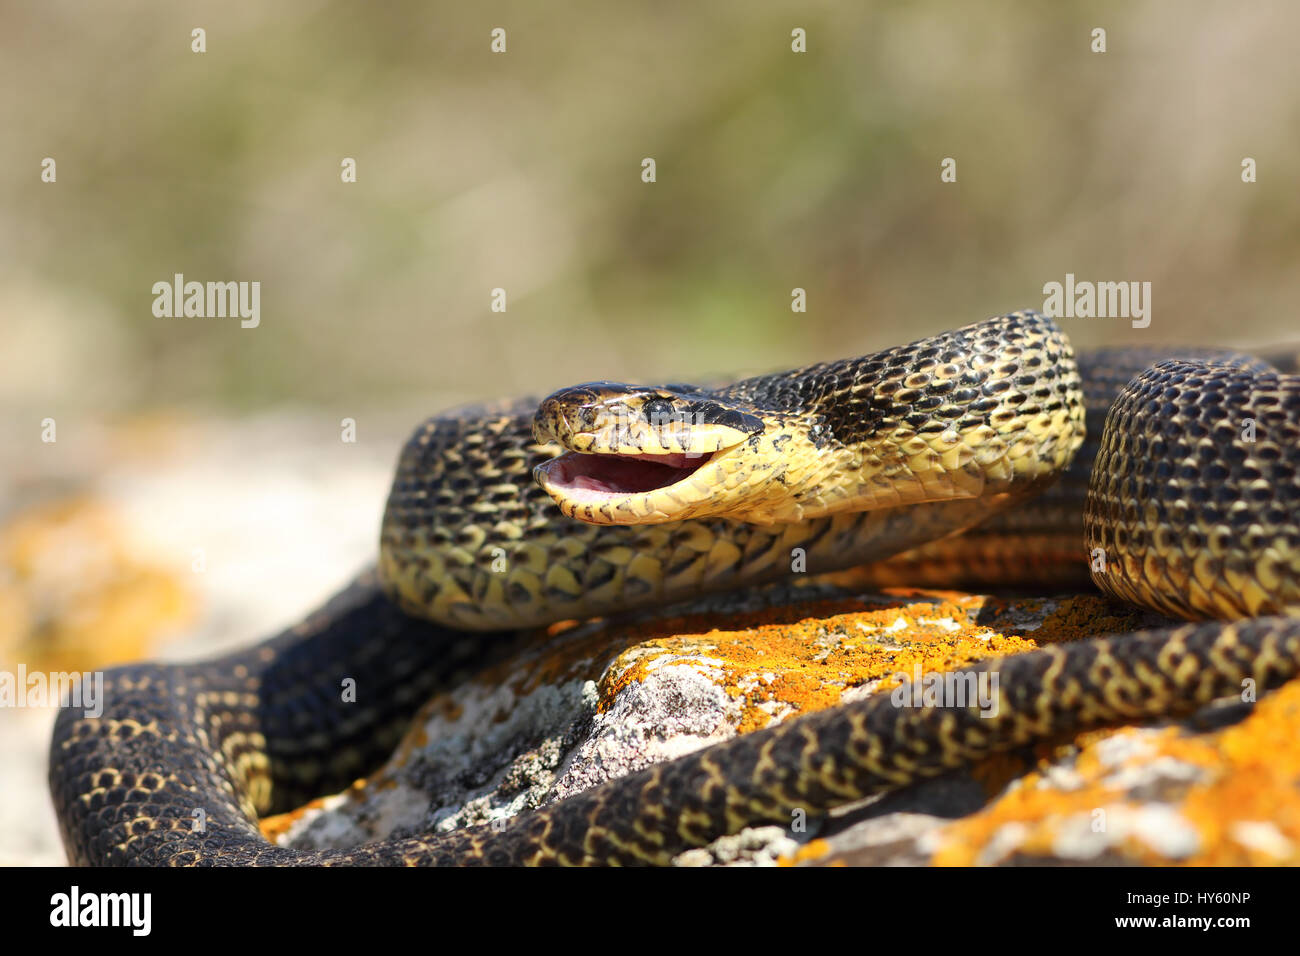 Elaphe sauromates ready to strike, with open mouth ( blotched snake ) Stock Photo